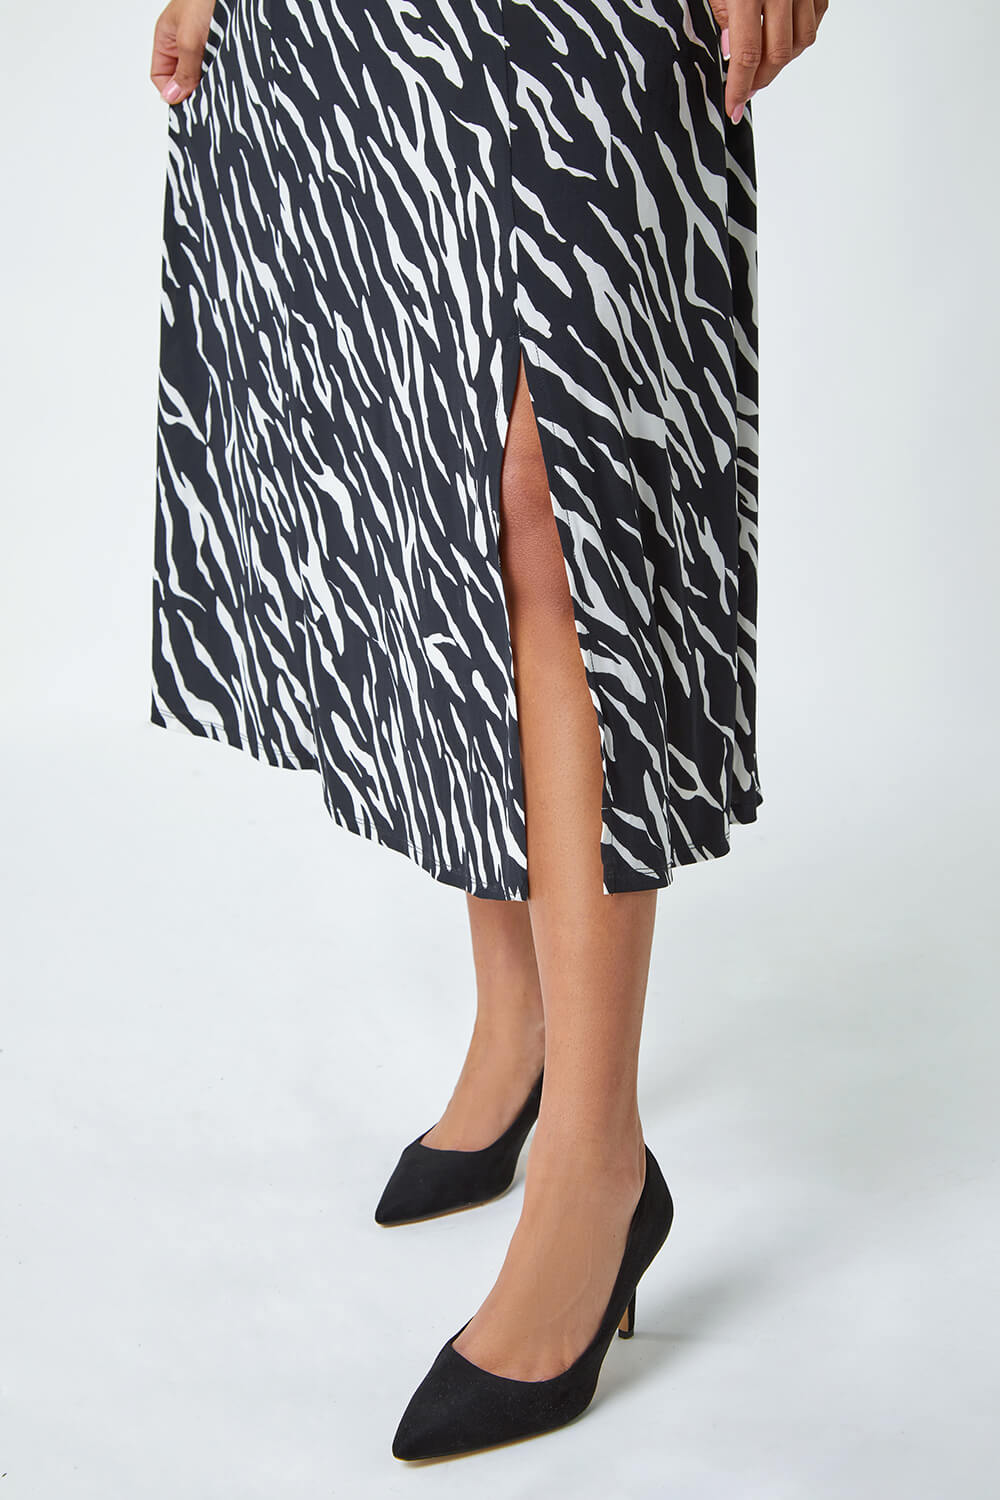 Black Zebra Print Stretch Ruched Midi Dress, Image 5 of 5